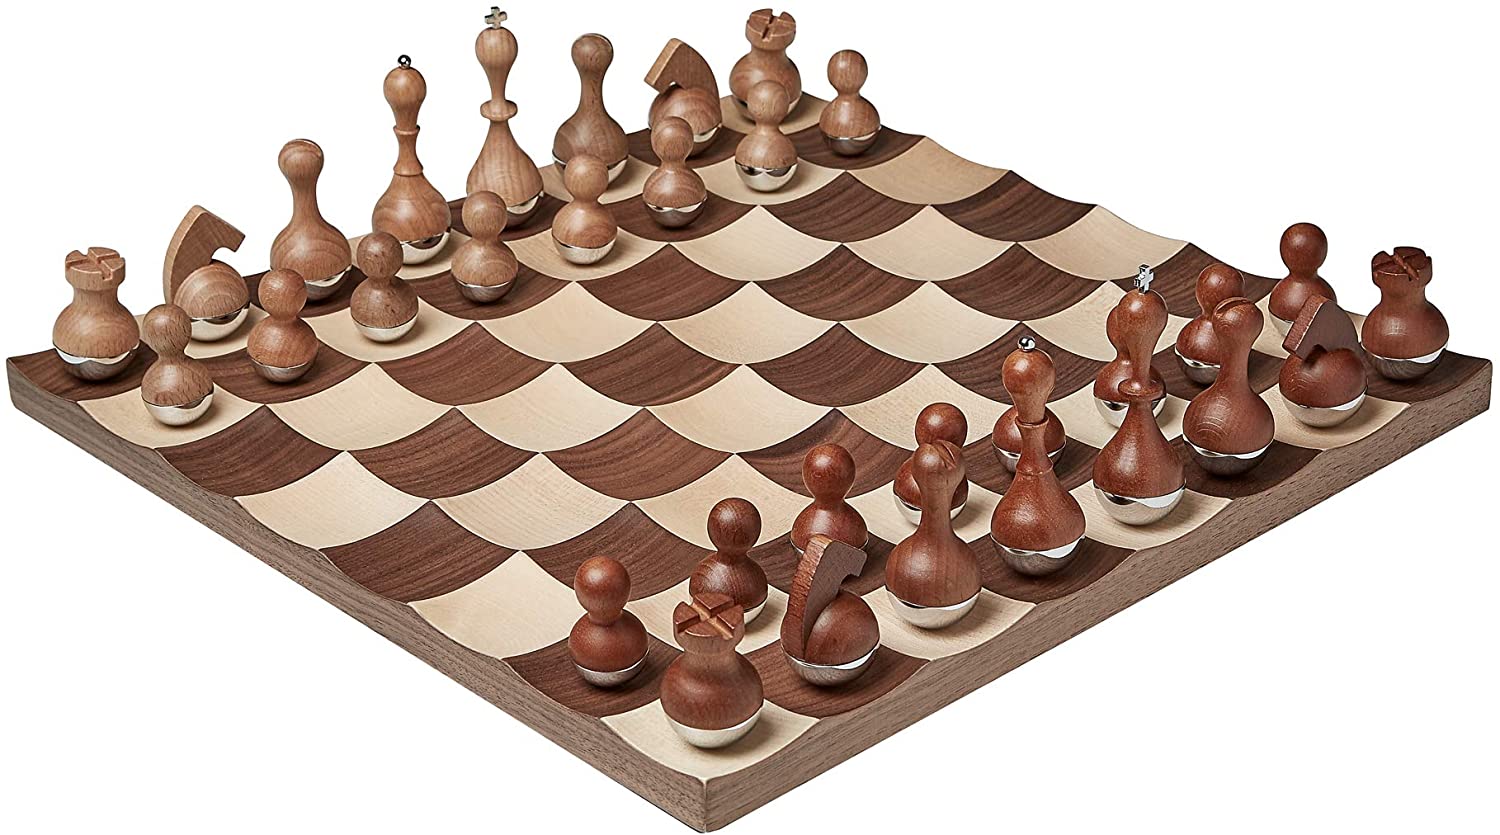 Details about   Unique Wooden Chess Set Large Carved Pieces 32pcs Boxed No Board 